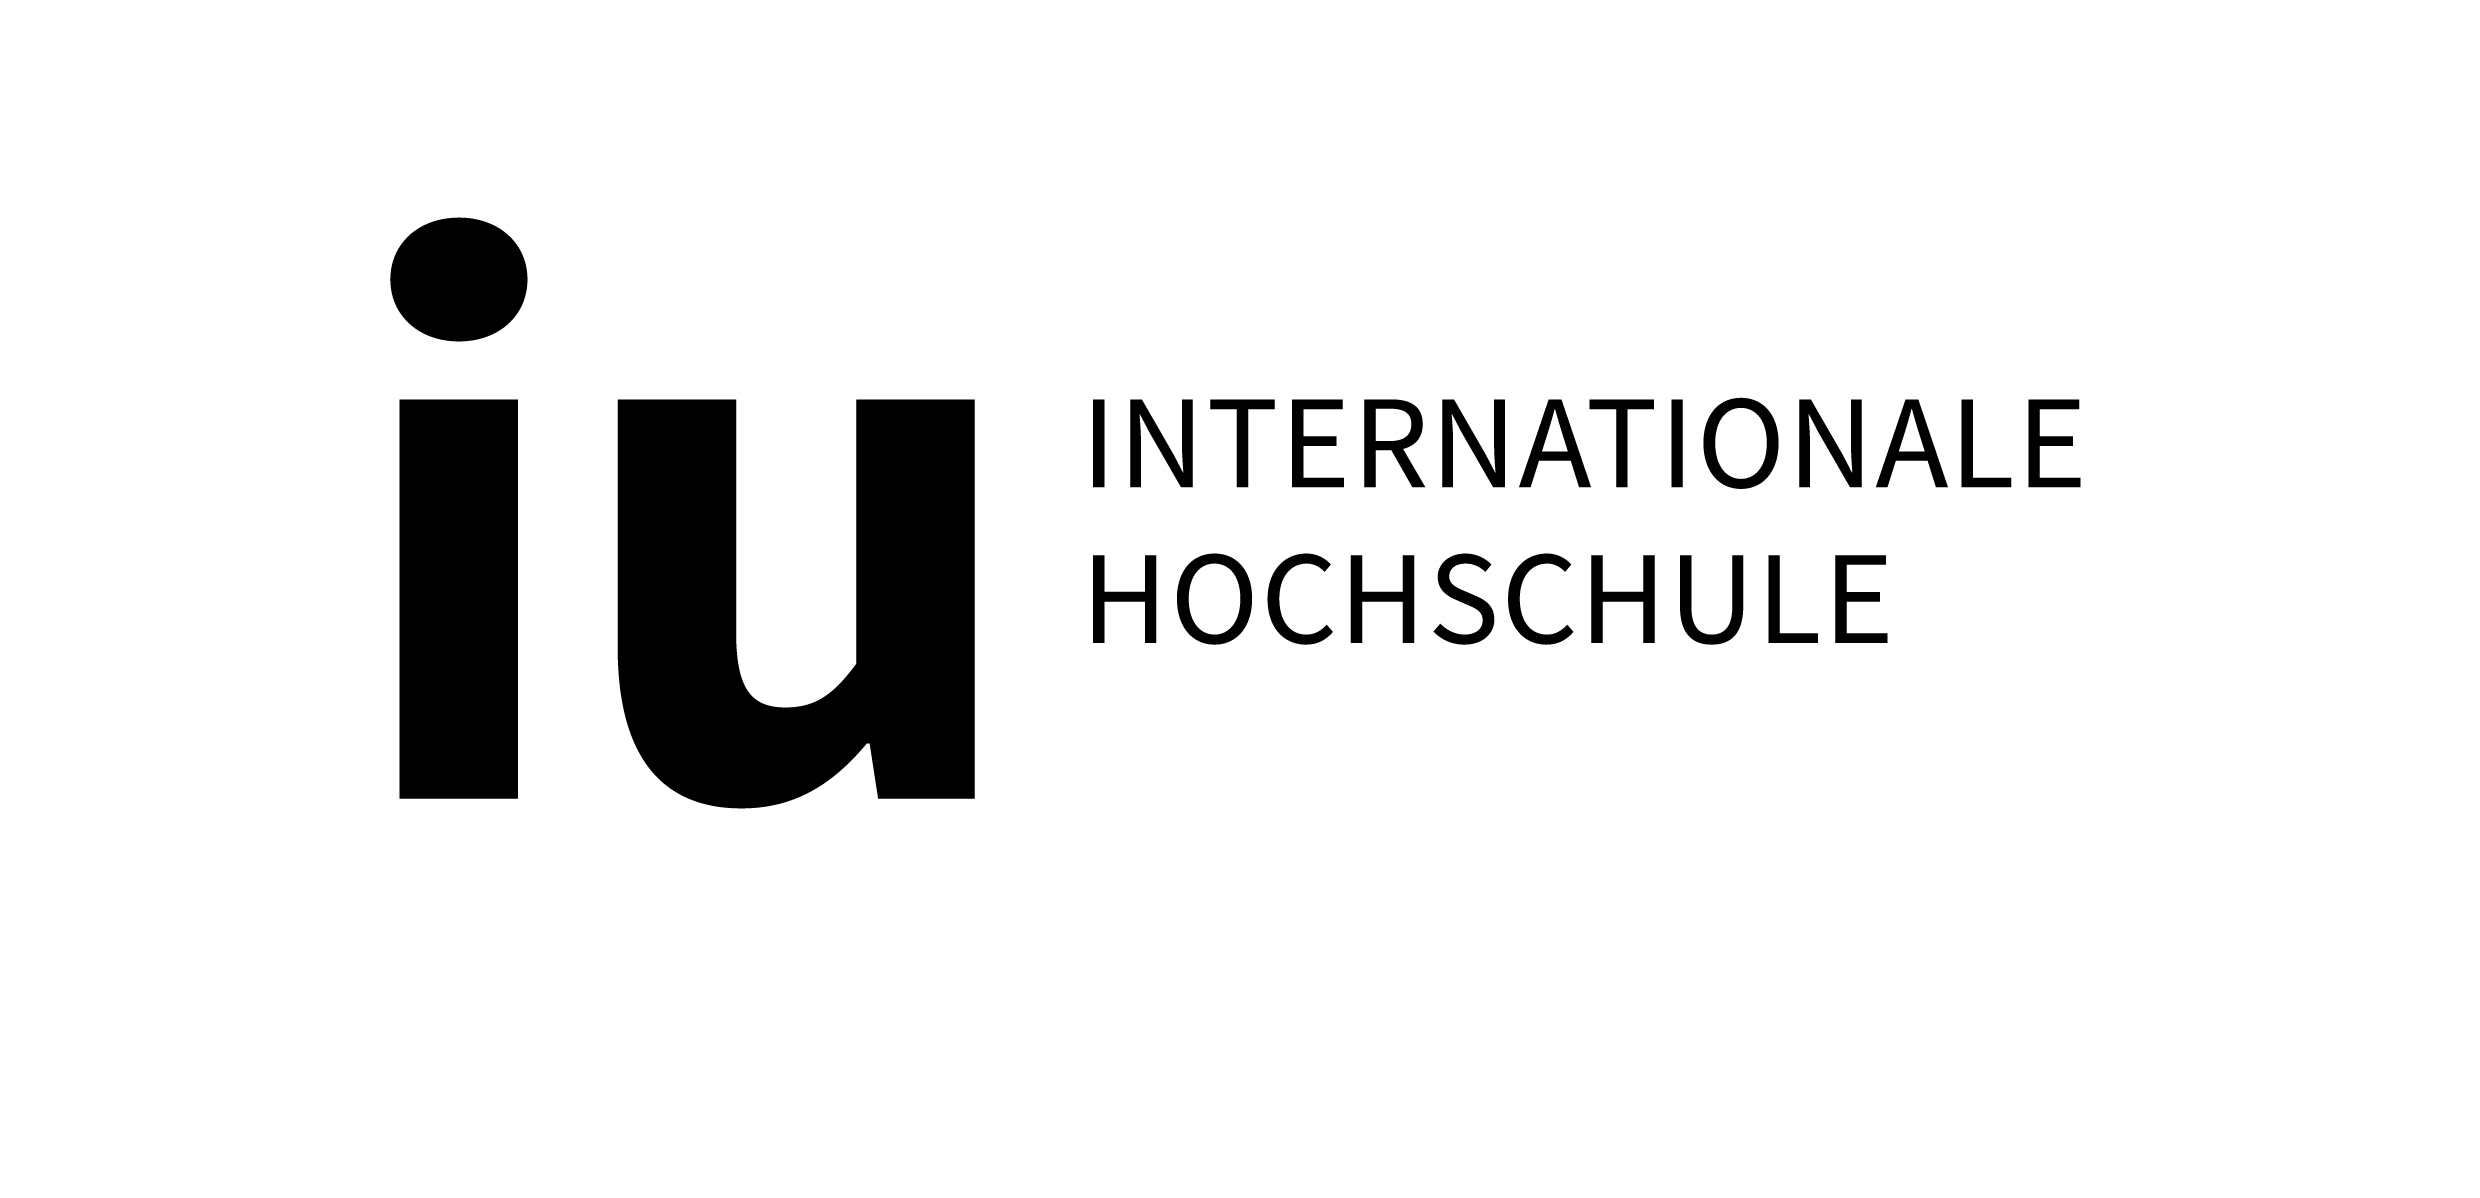 Logo-IU